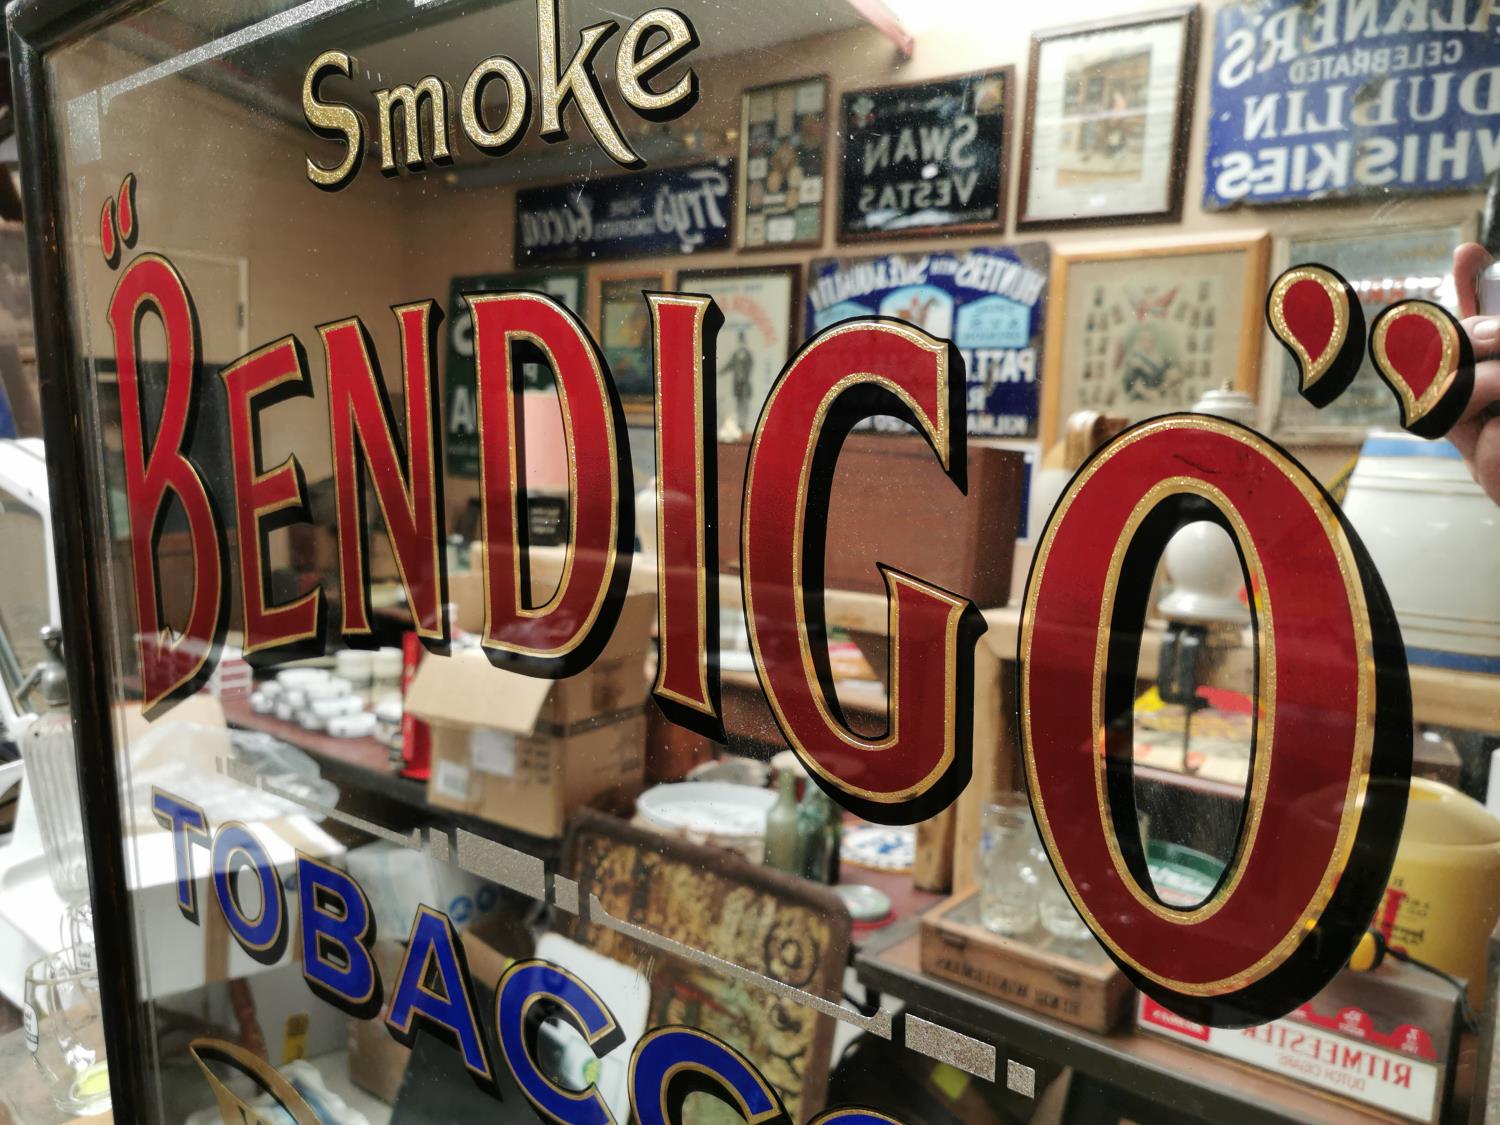 Bendigo Tobacco's advertising mirror. - Image 2 of 5